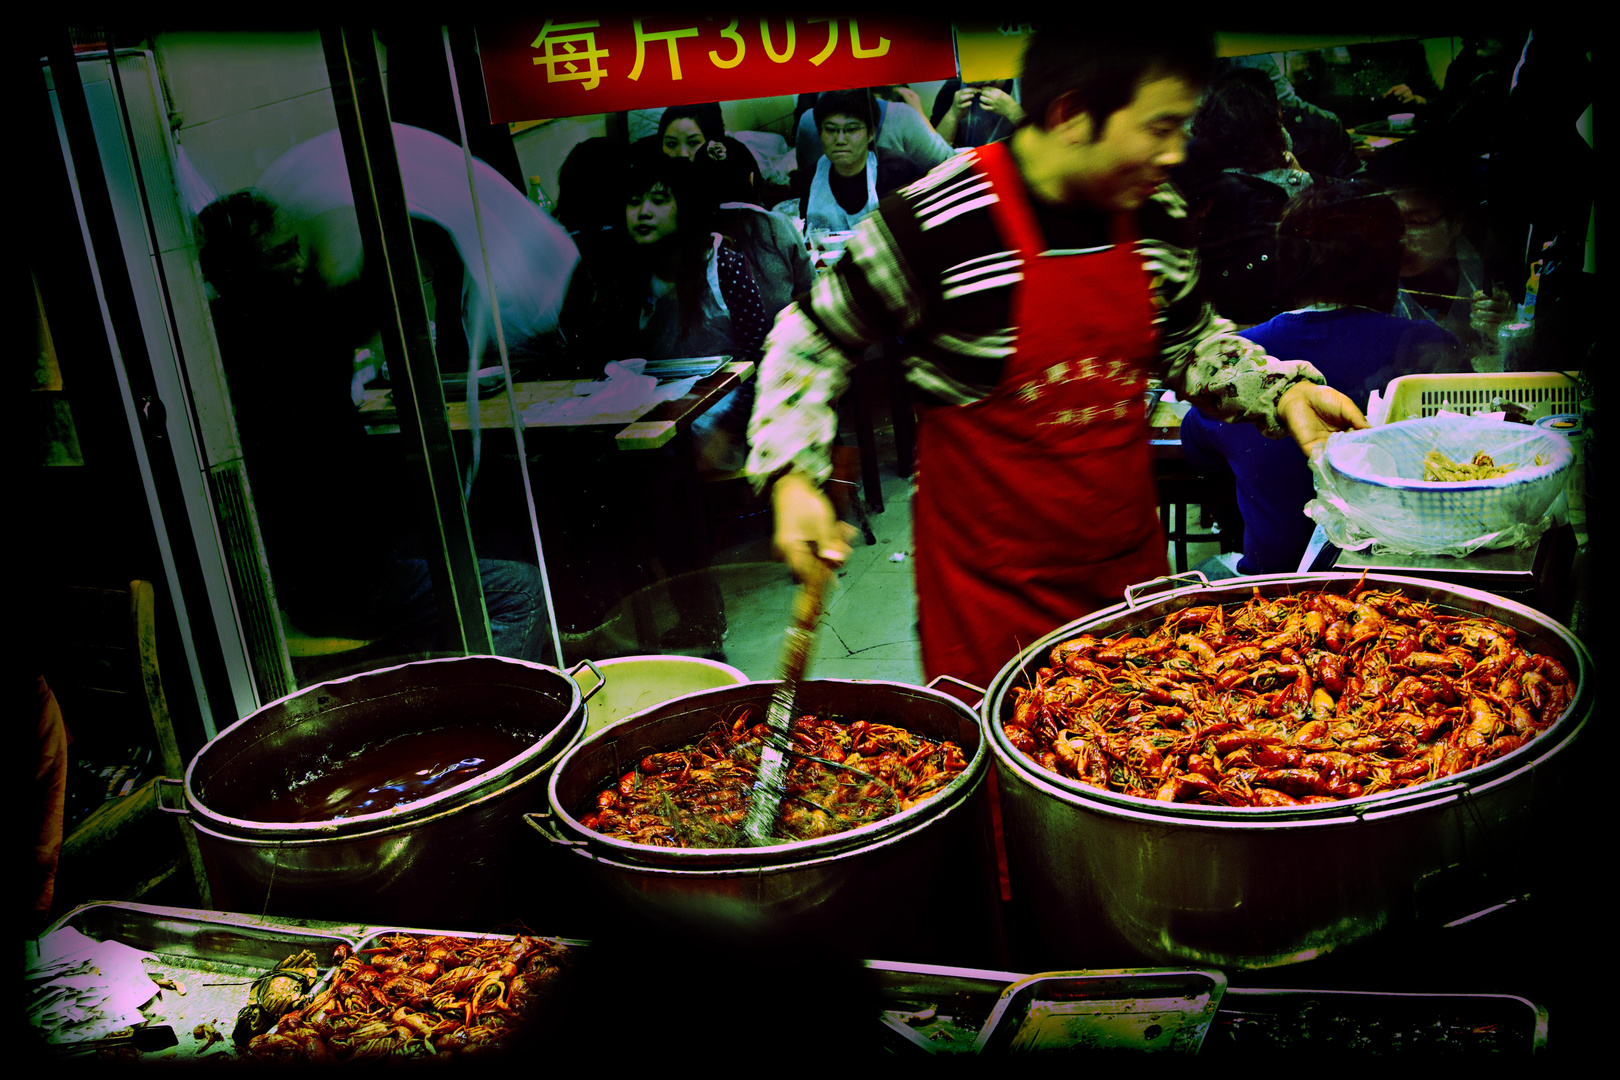 Shanghai Night Food Market